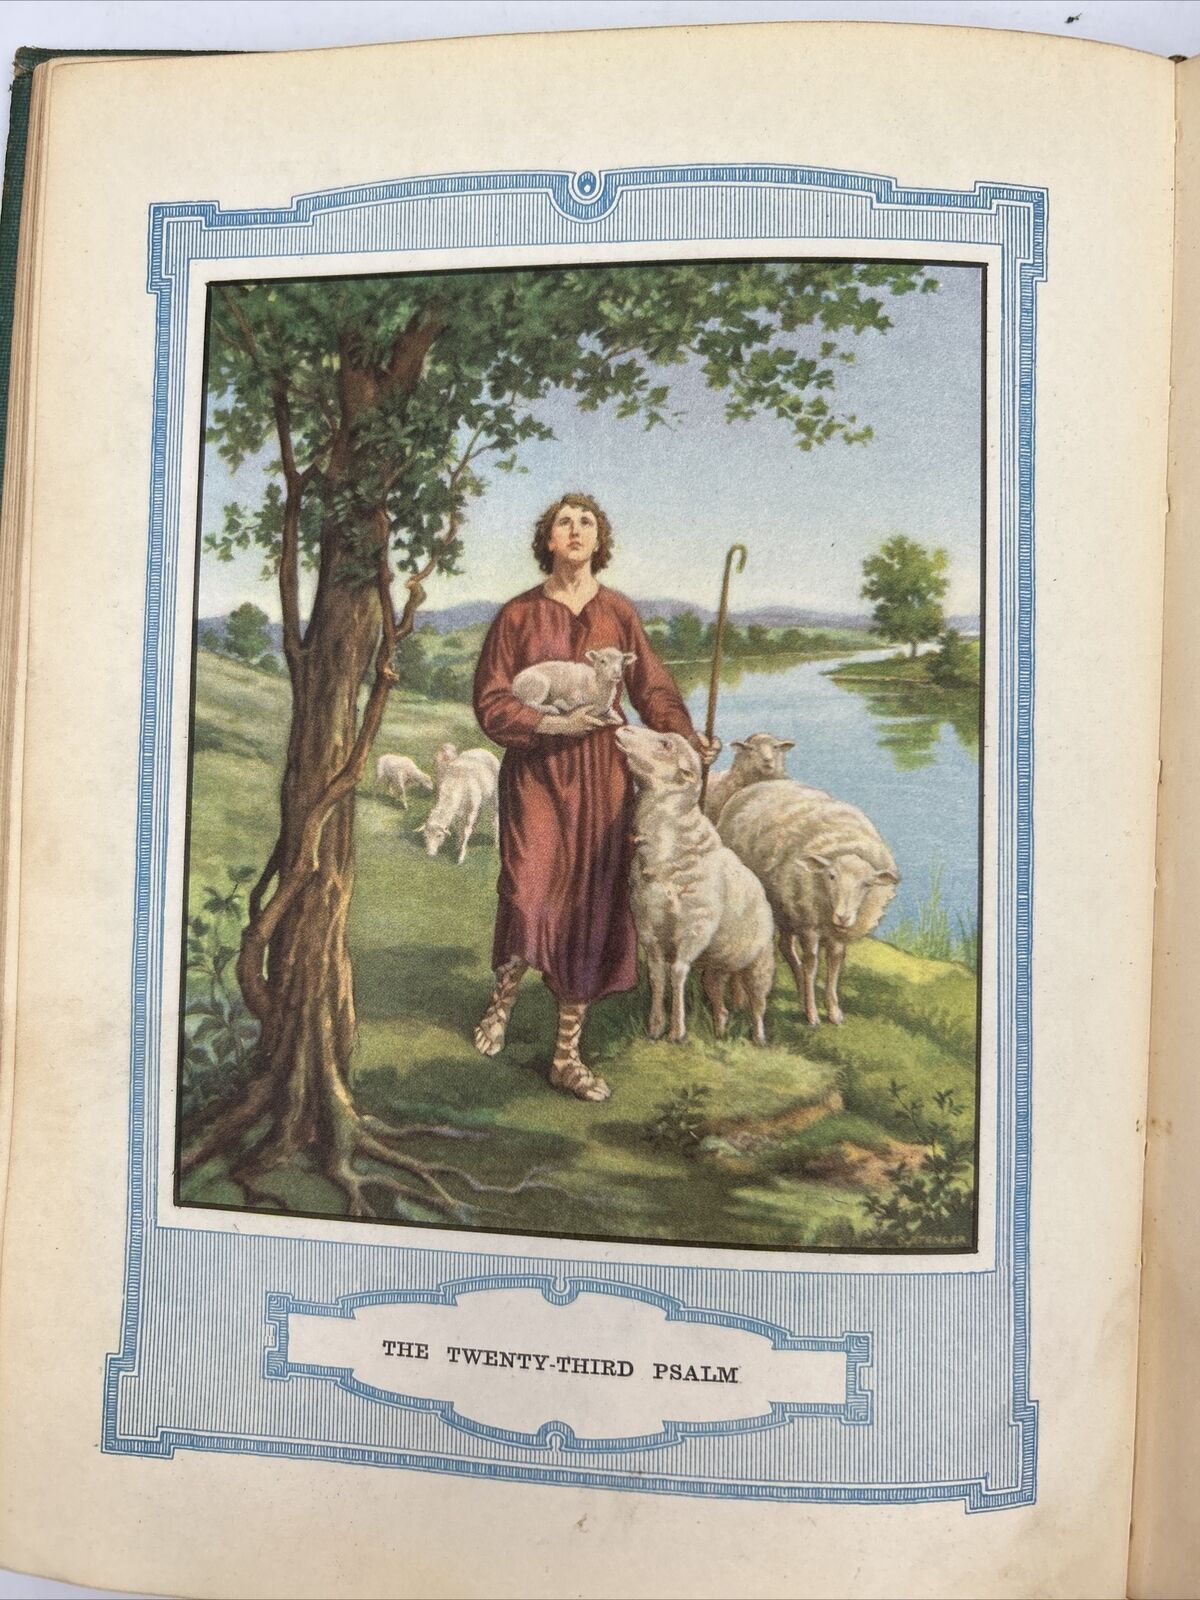 1925/1930 Copyright Gospel Advocate SHORT BIBLE STORIES by James E Chessor